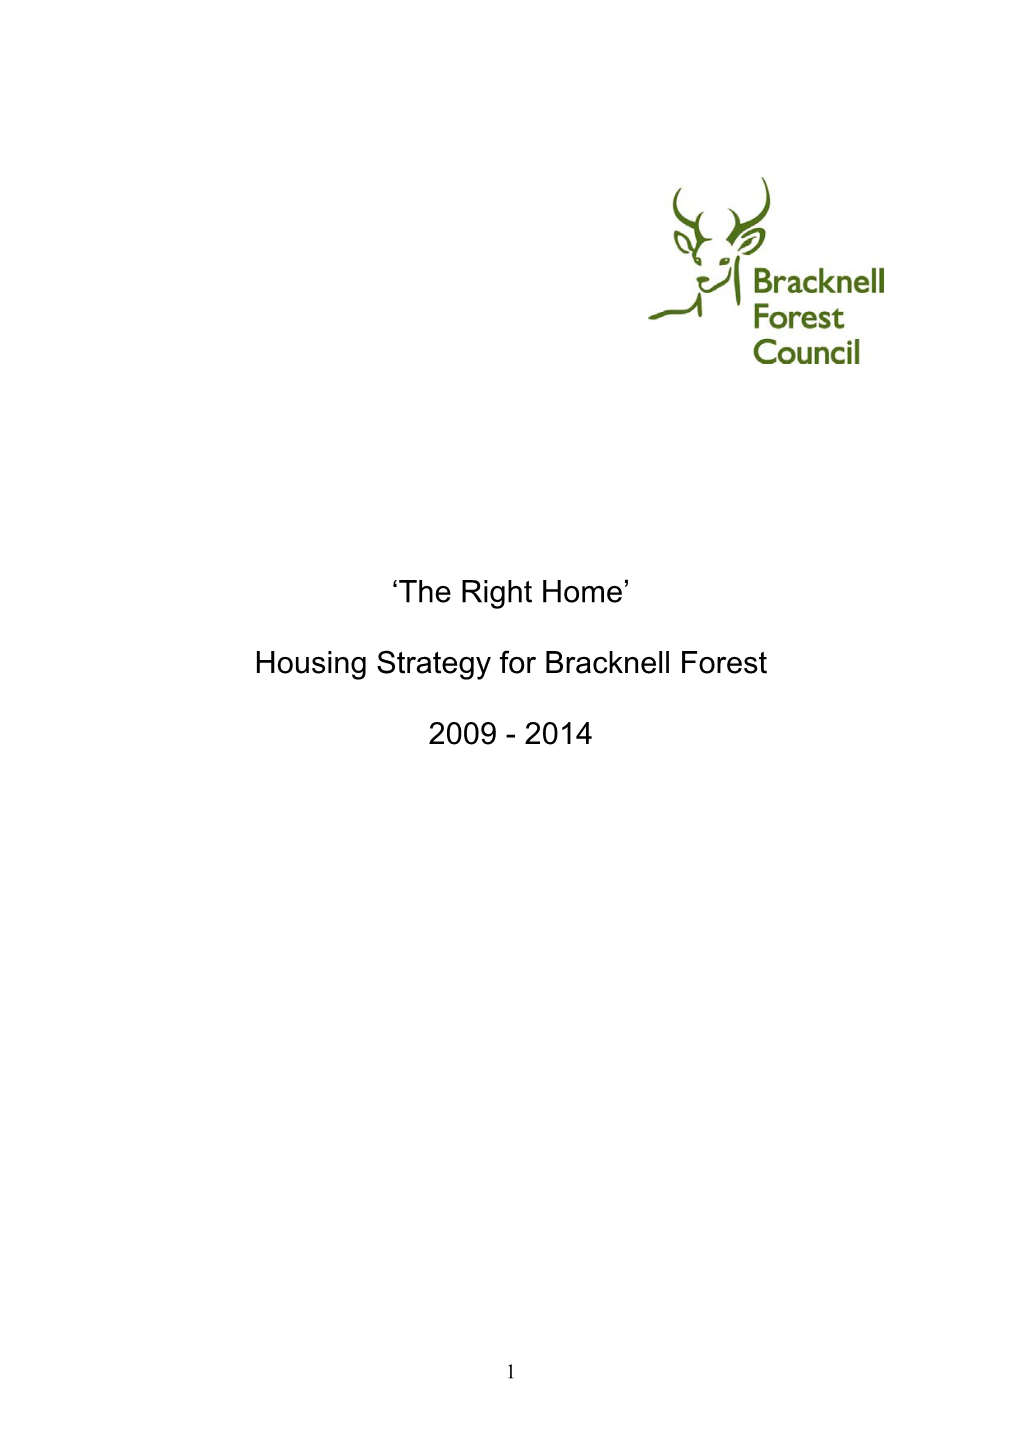 Bracknell Forest Housing Strategy 2008-2014